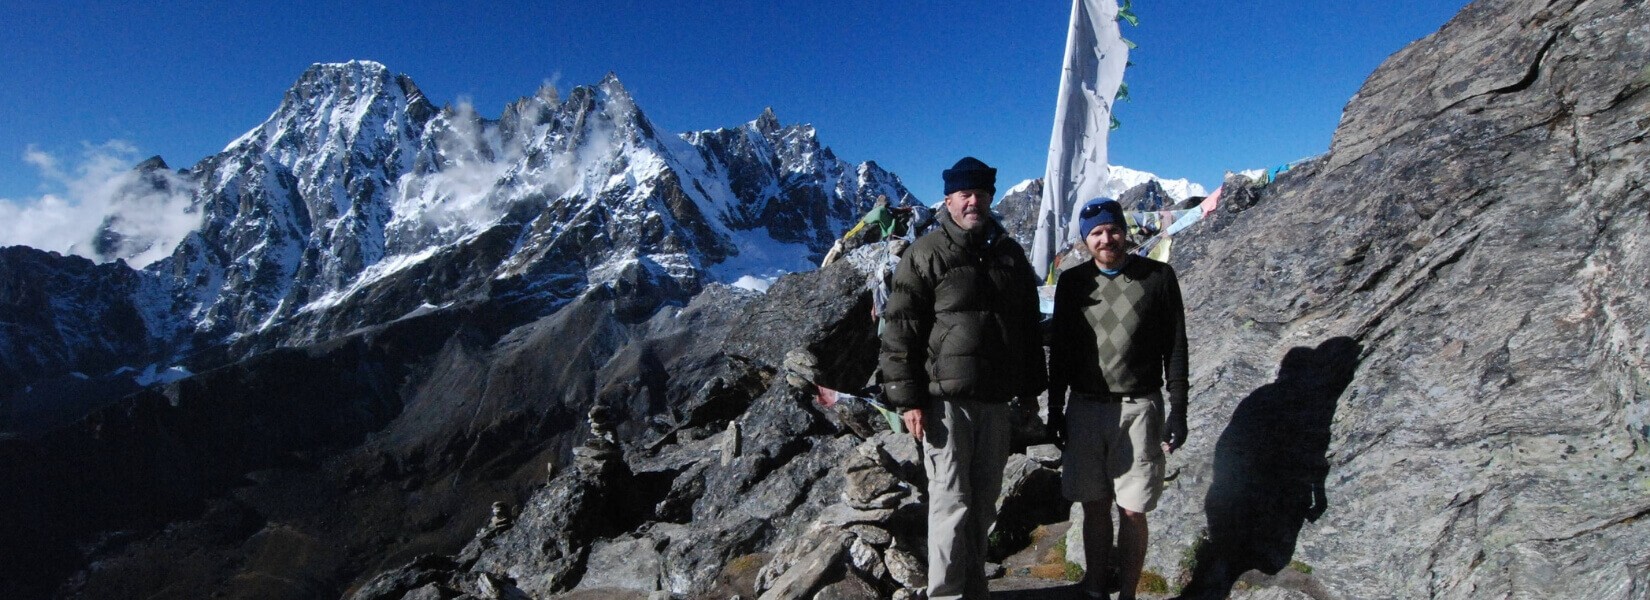 Everest Base Camp Trekking The deity of trekking in Nepal